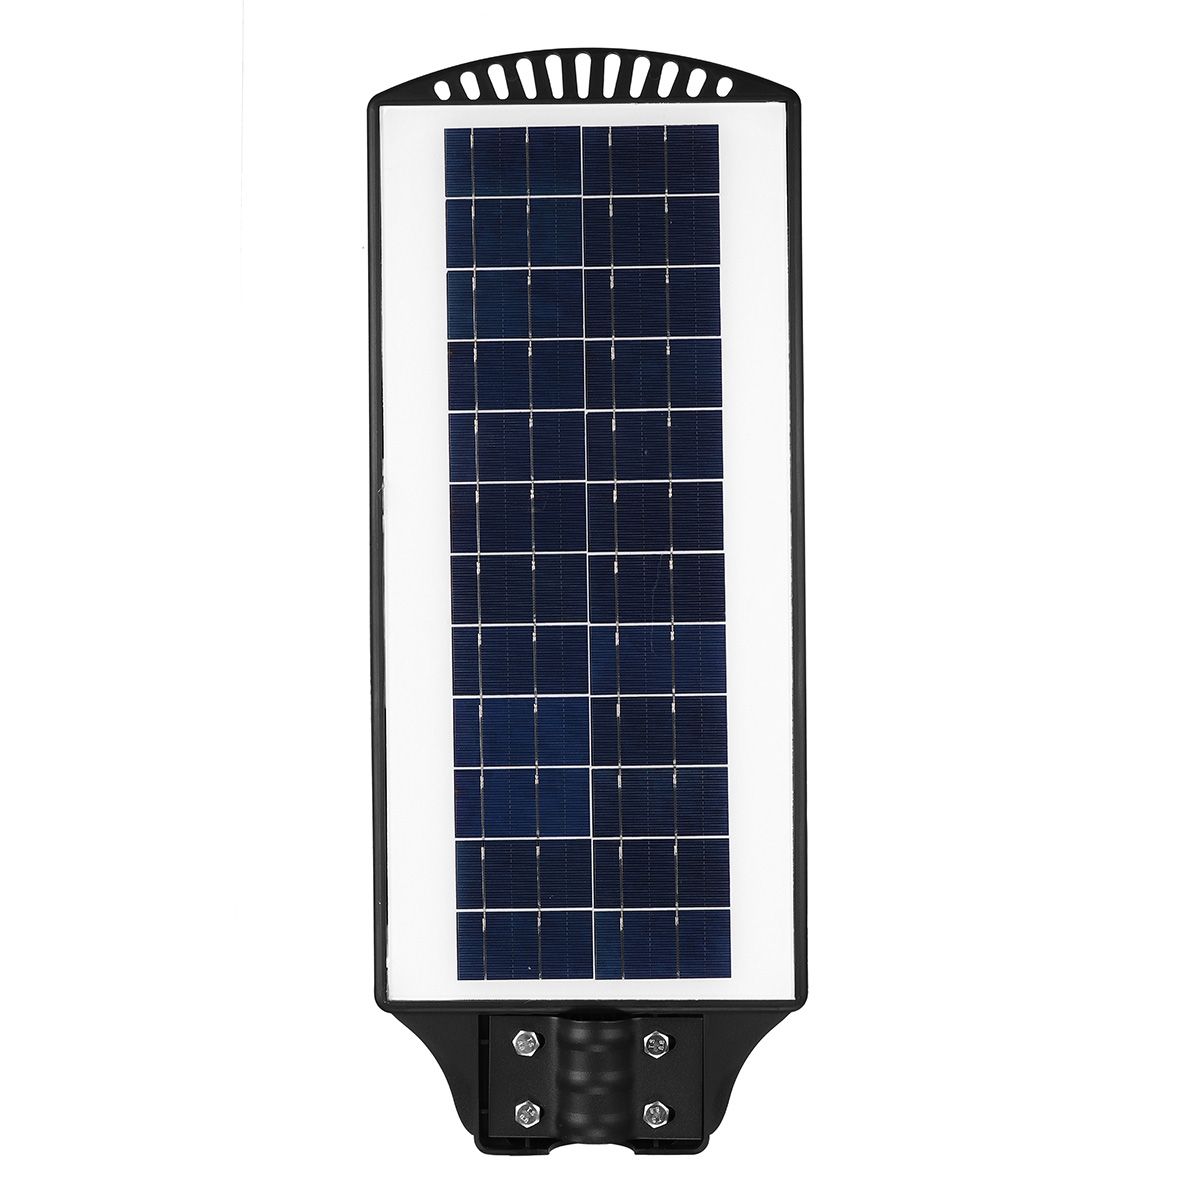 500-2500W-208-624-LED-Solar-Street-Light-PIR-Motion-Sensor-Wall-Lamp-with-Remote-1704888